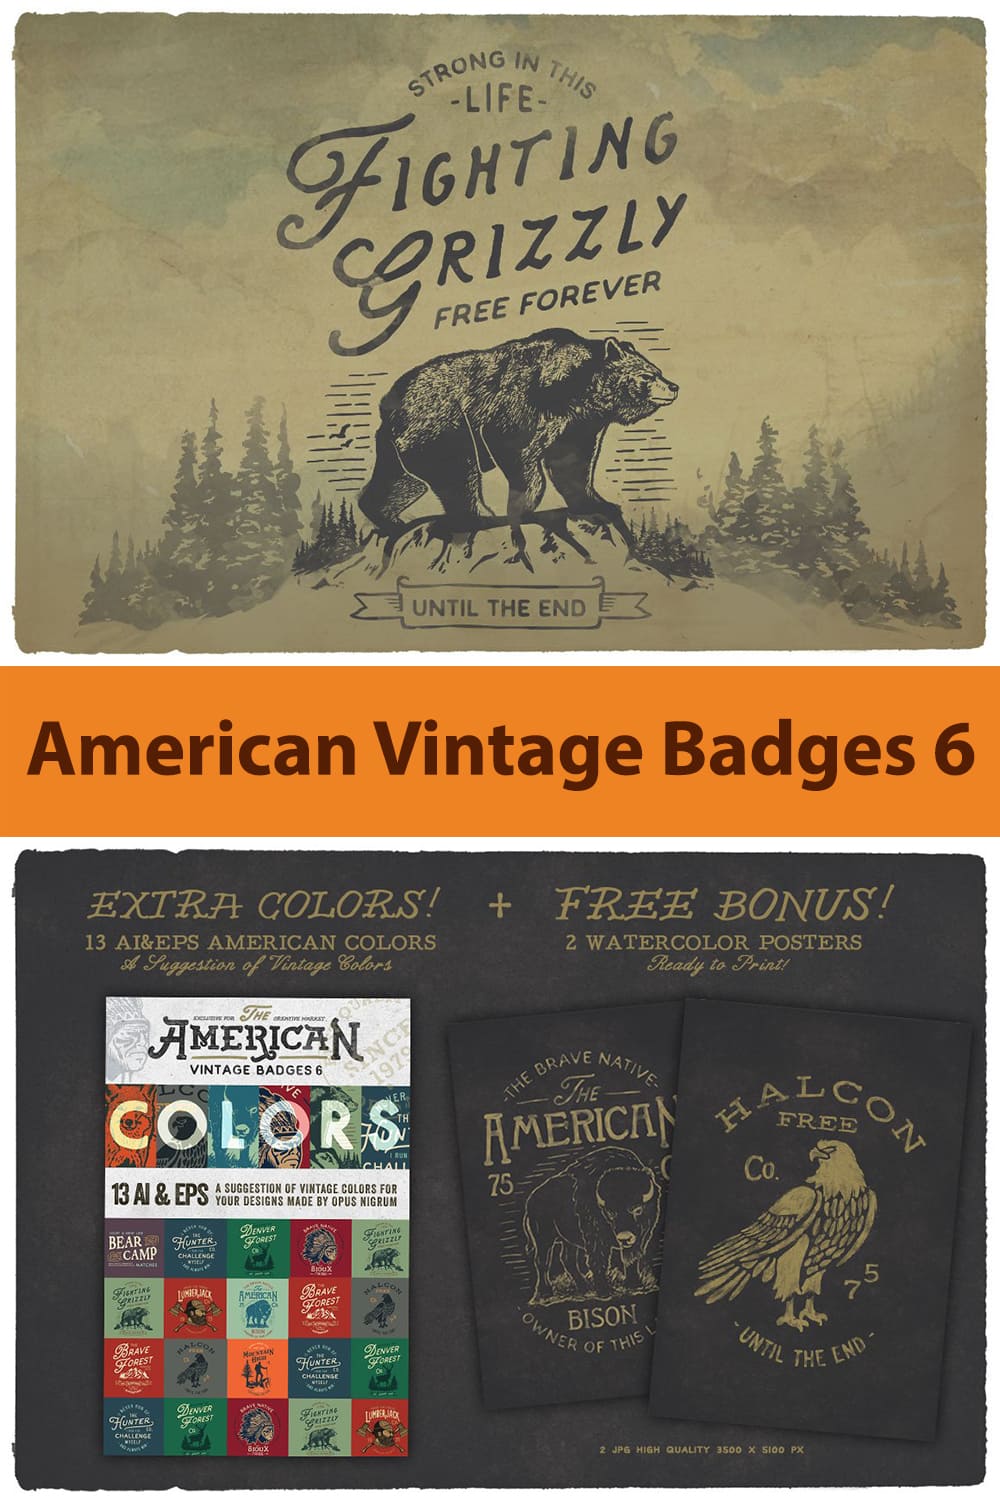 American Vintage Badges 6 - Pinterest.